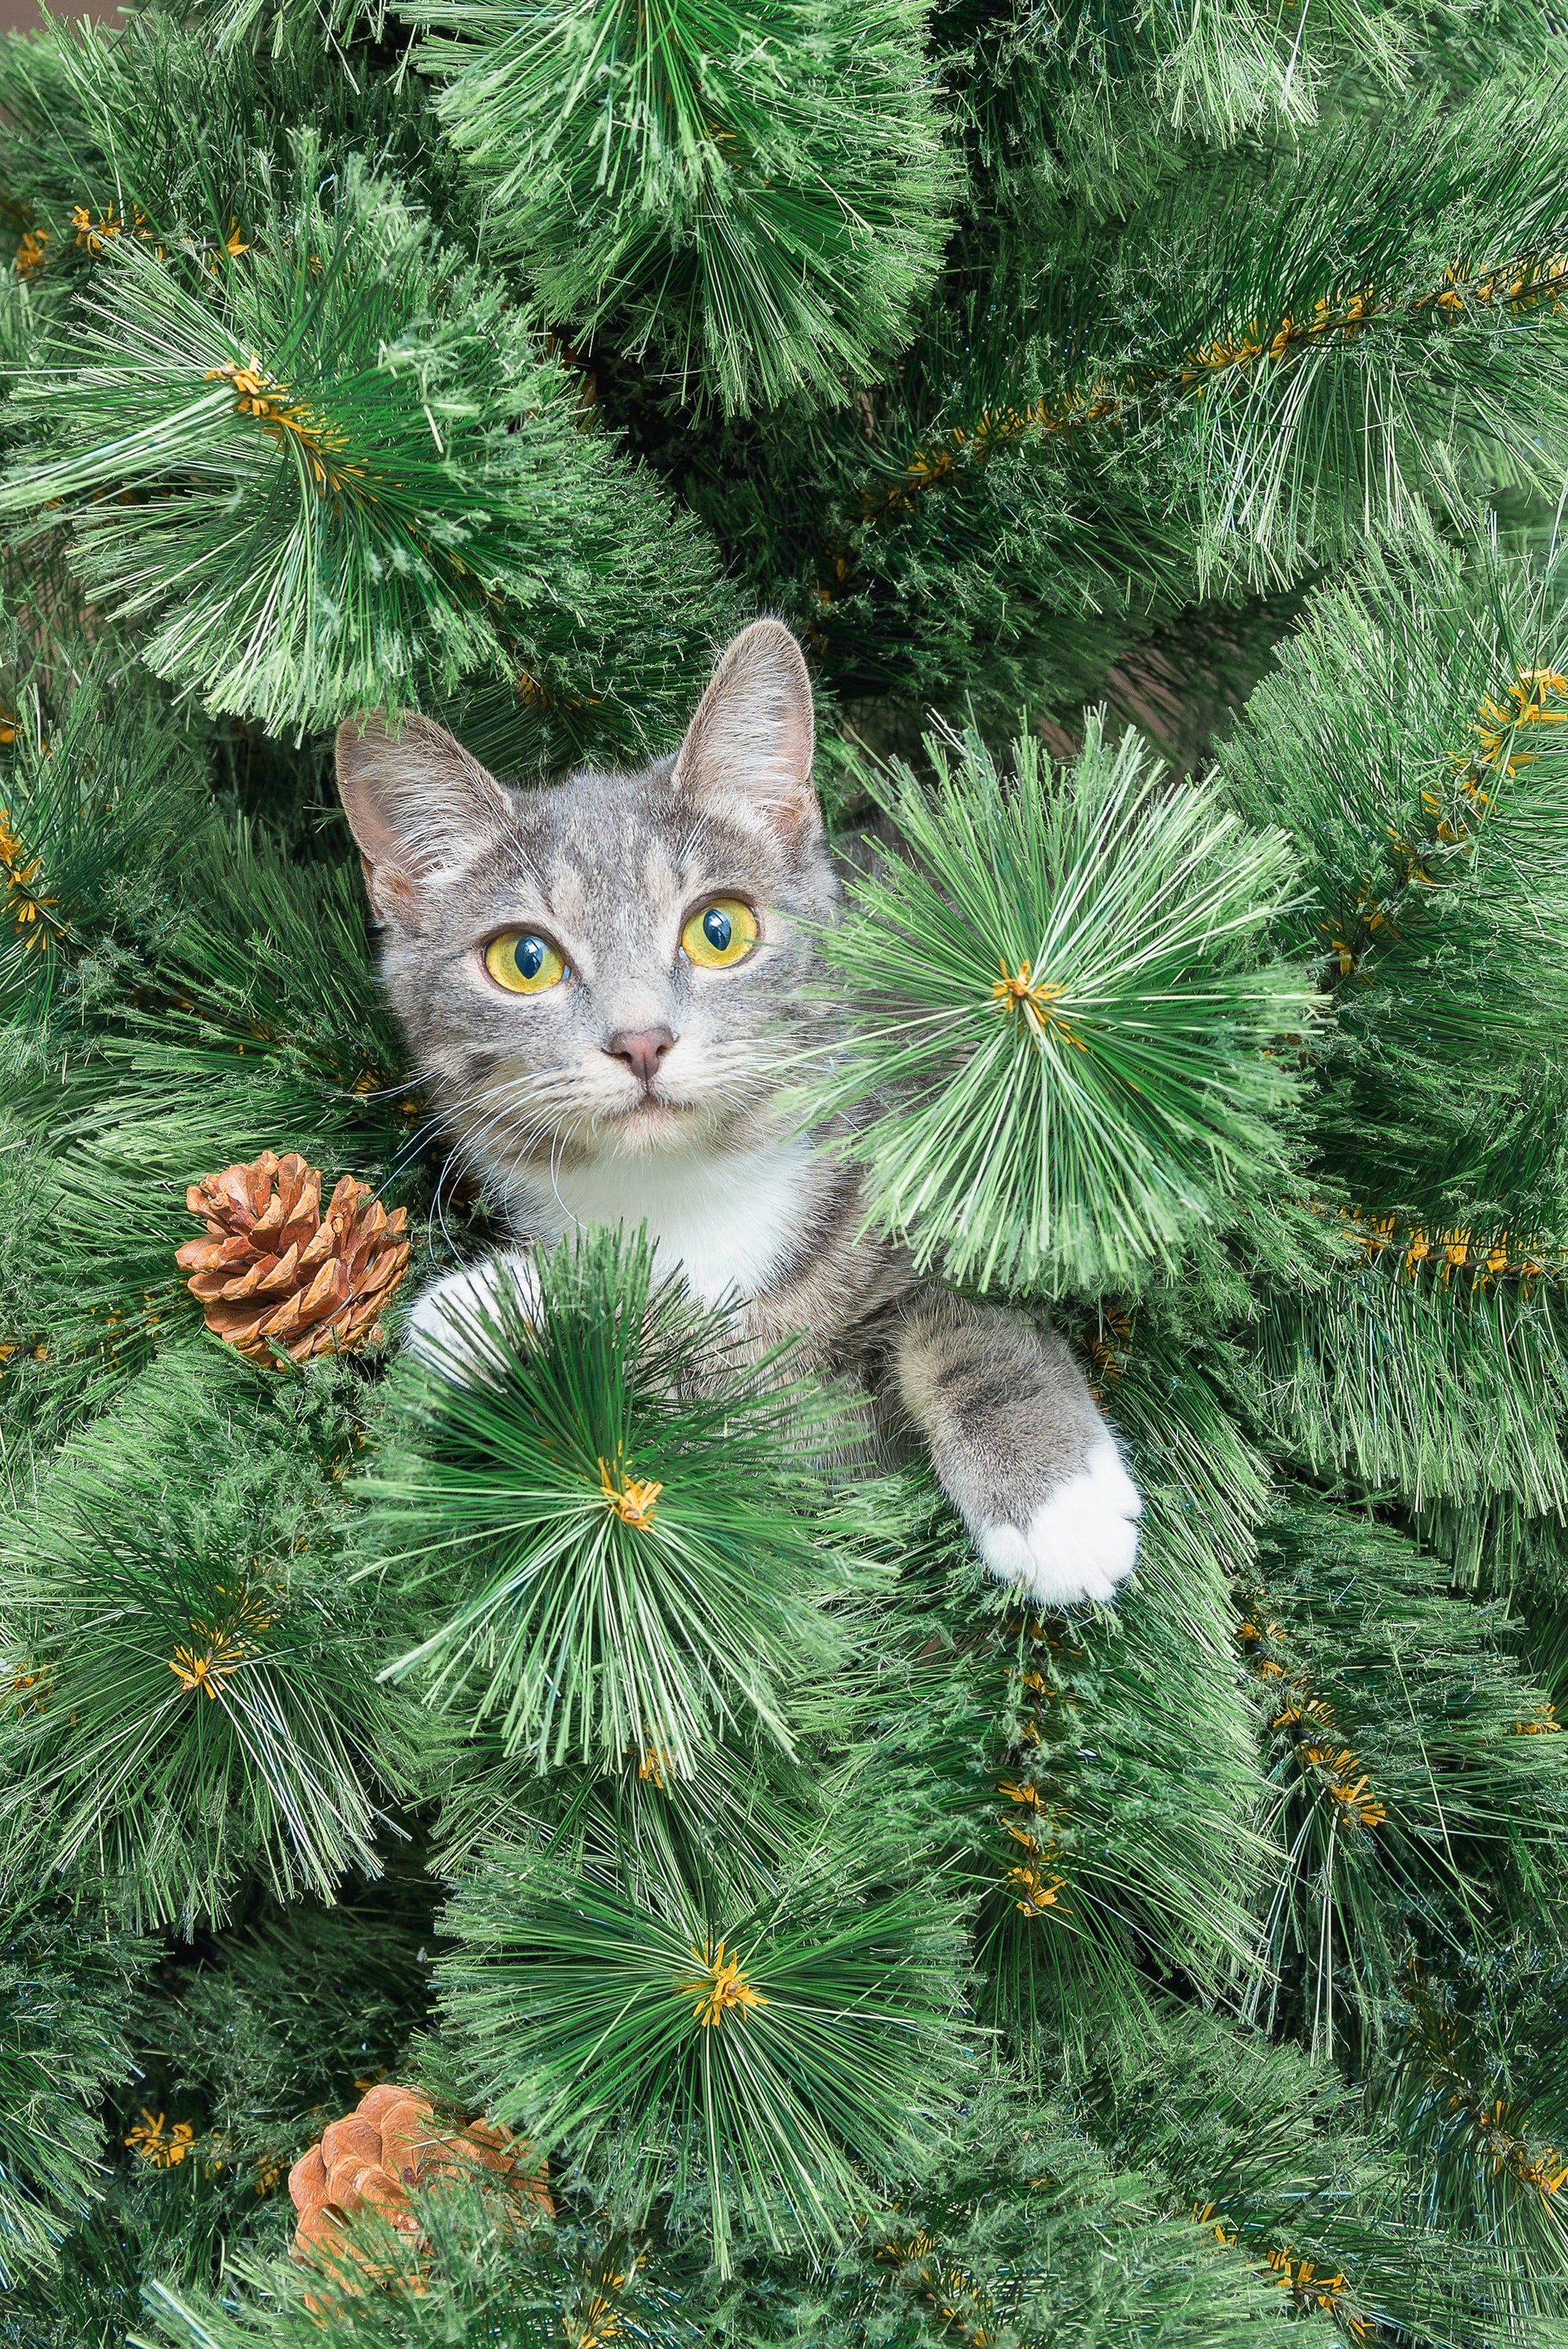 How to Keep Kitty Safe Around Your Christmas Home Decor